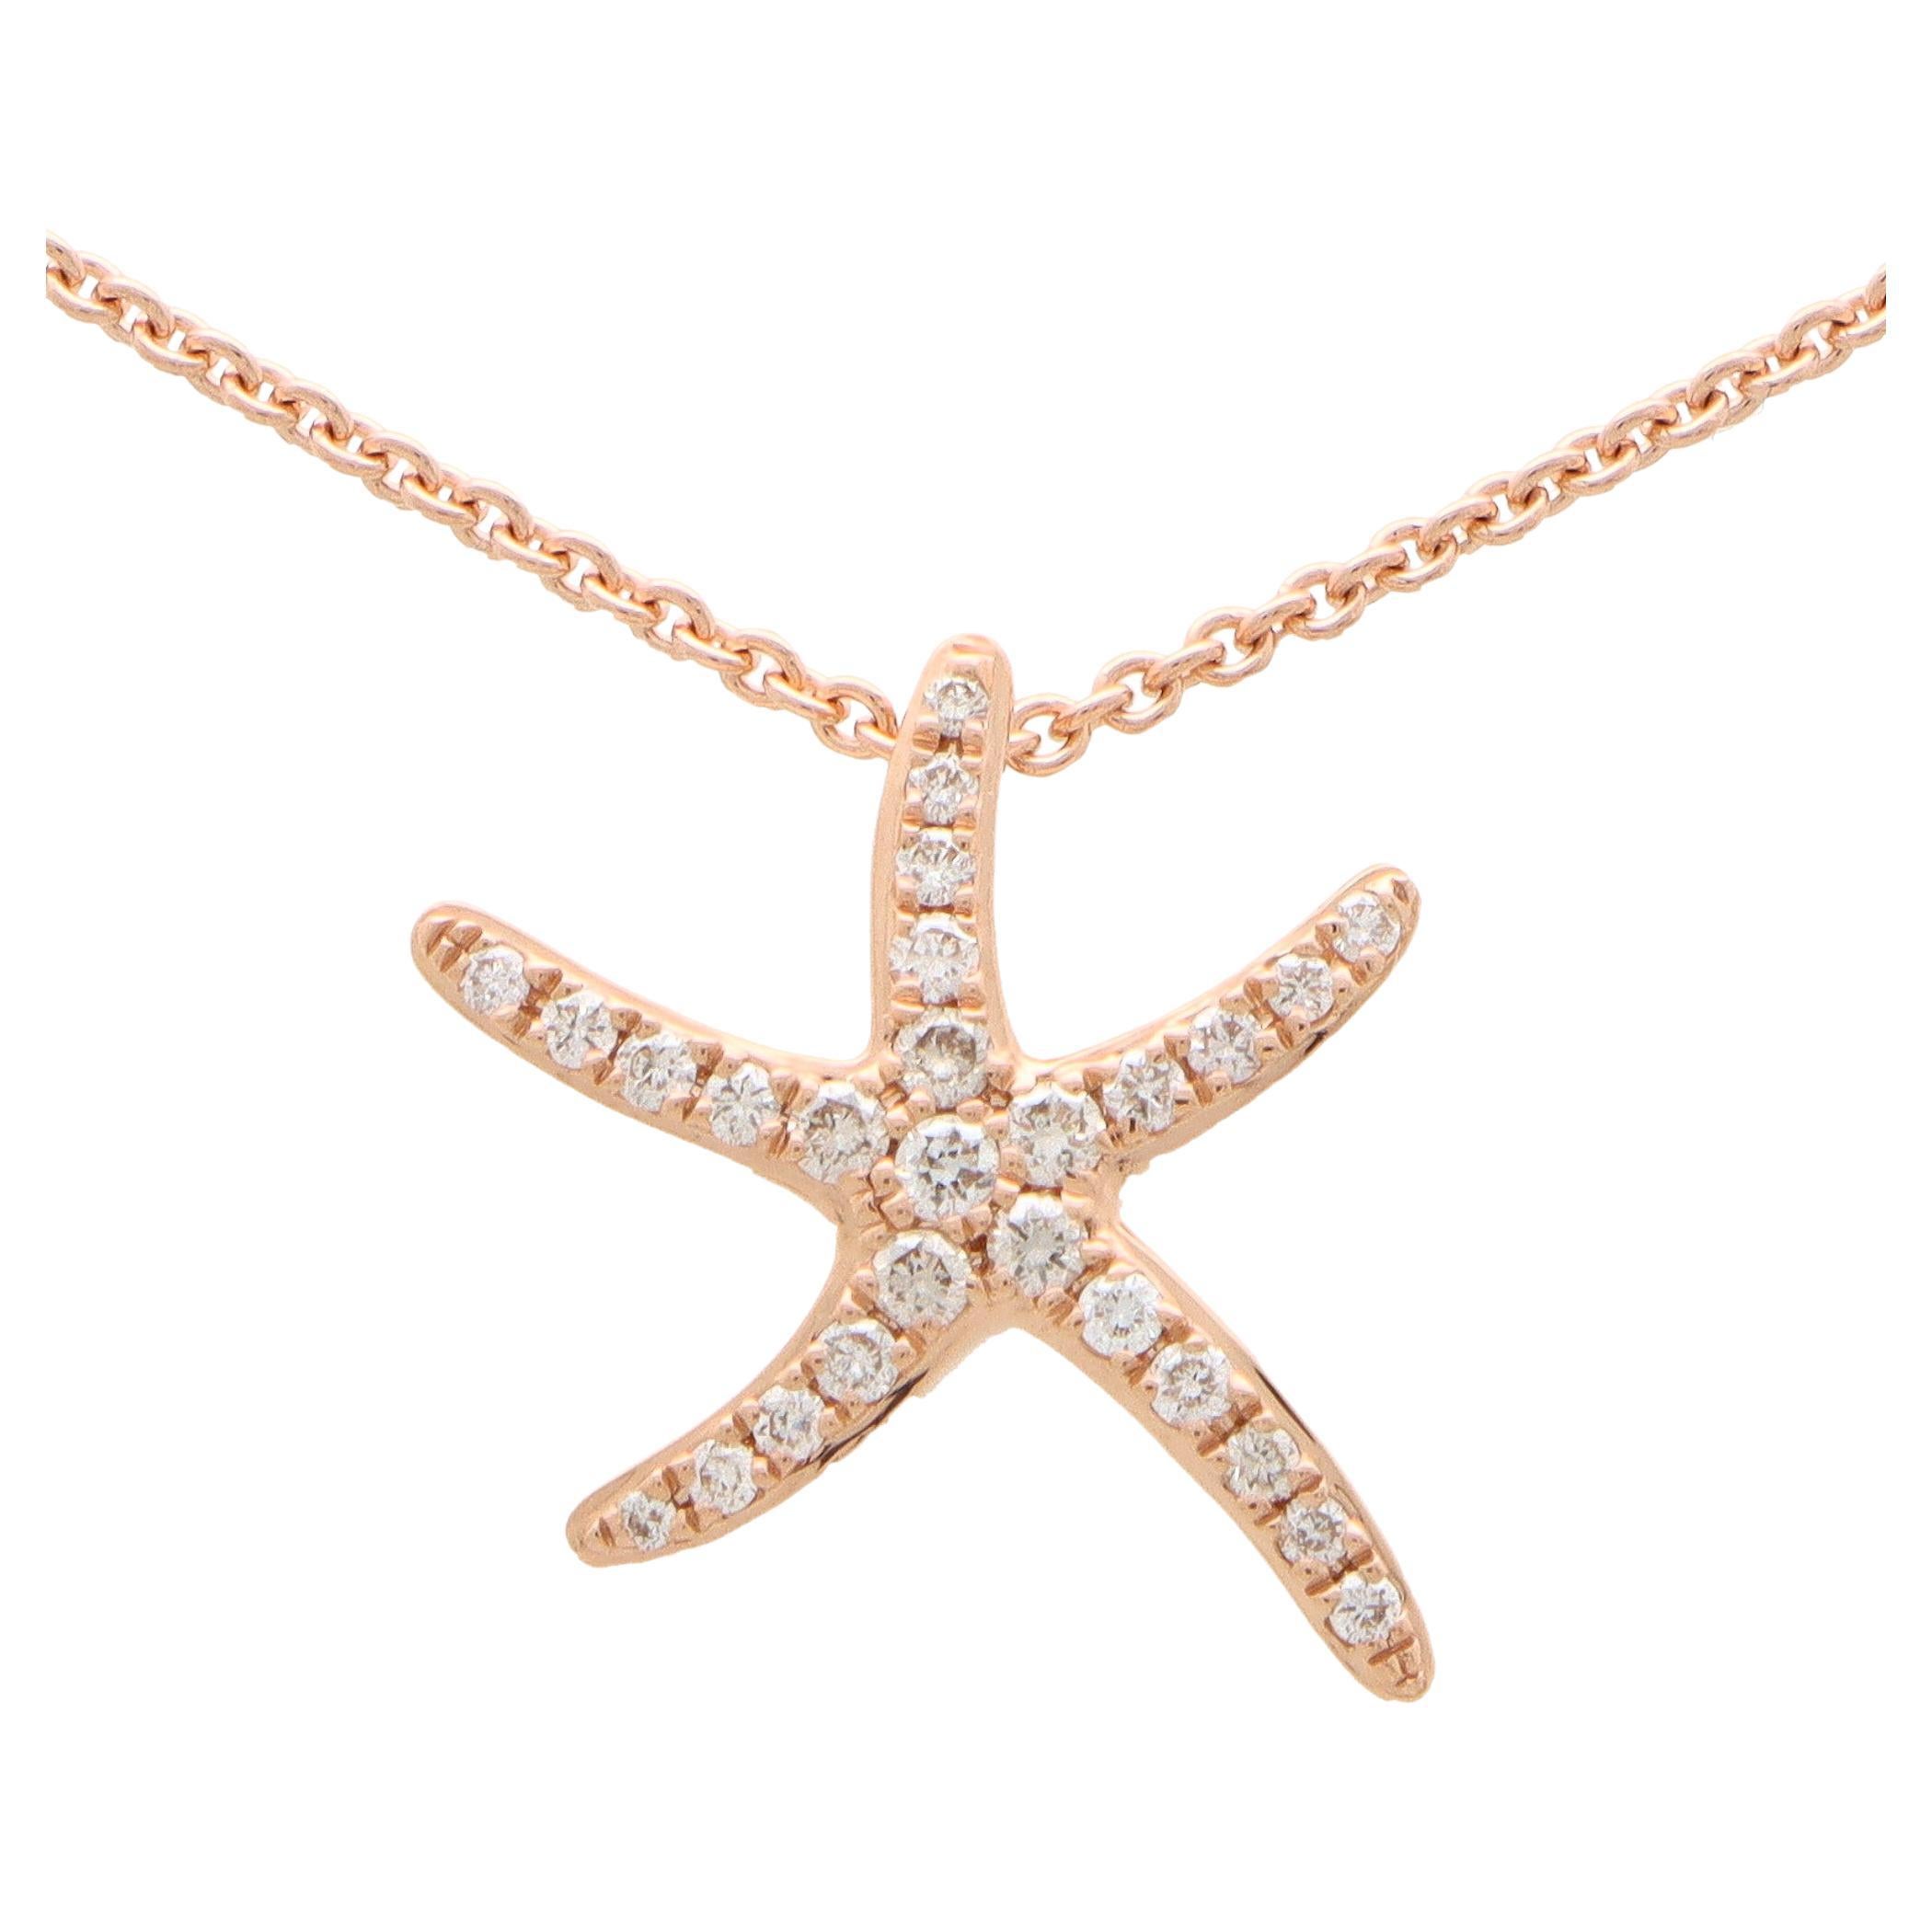 Contemporary Medium Diamond Starfish Pendant Necklace Set in 18k Rose Gold